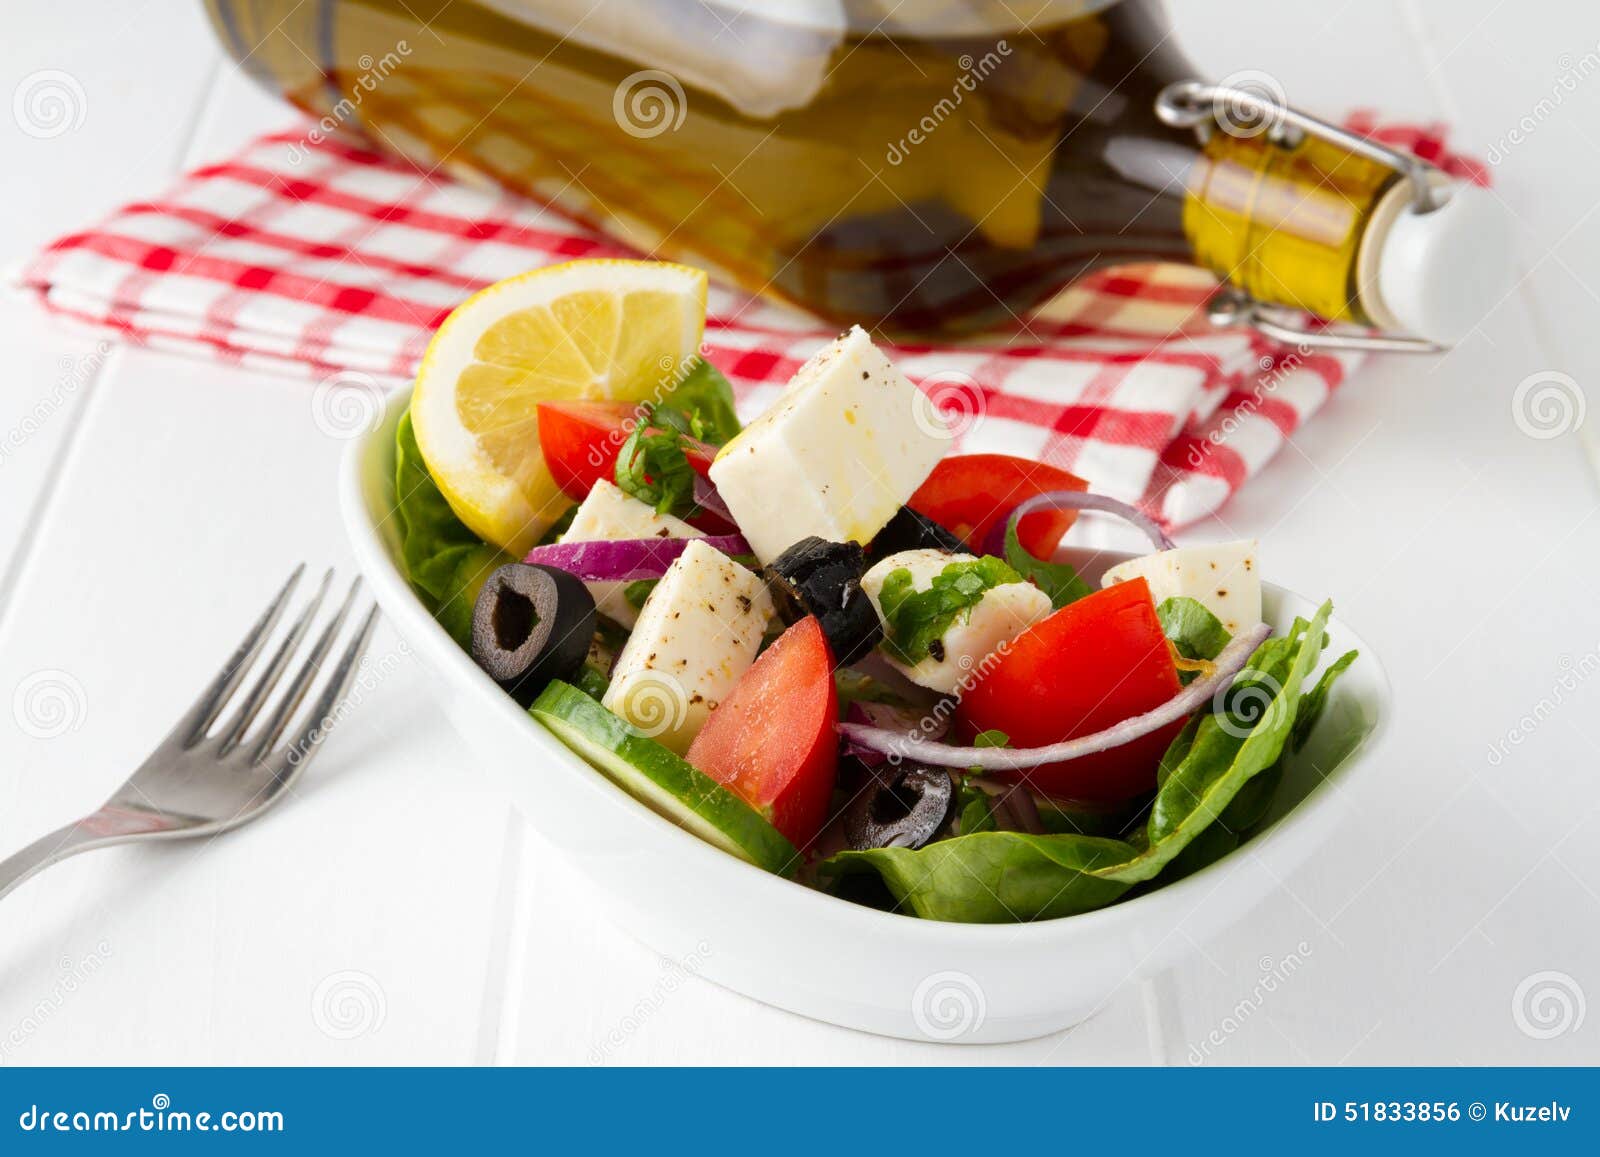 fresh vegetable salad with feta